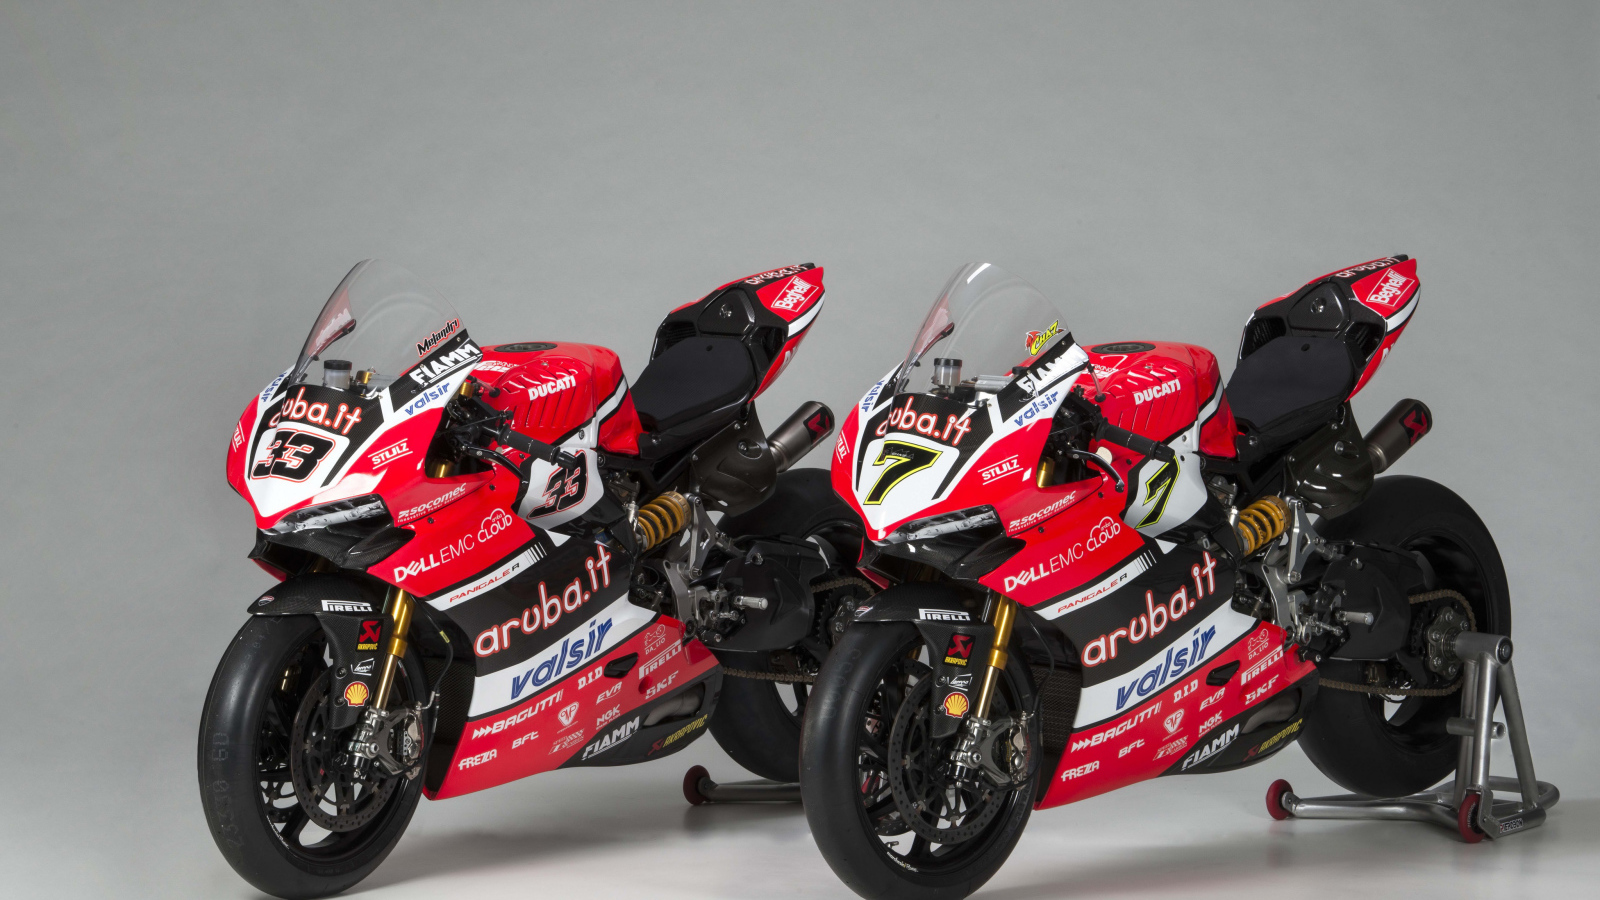 Два мотоцикла Ducati  Panigale R Superbike, 2017 на сером фоне